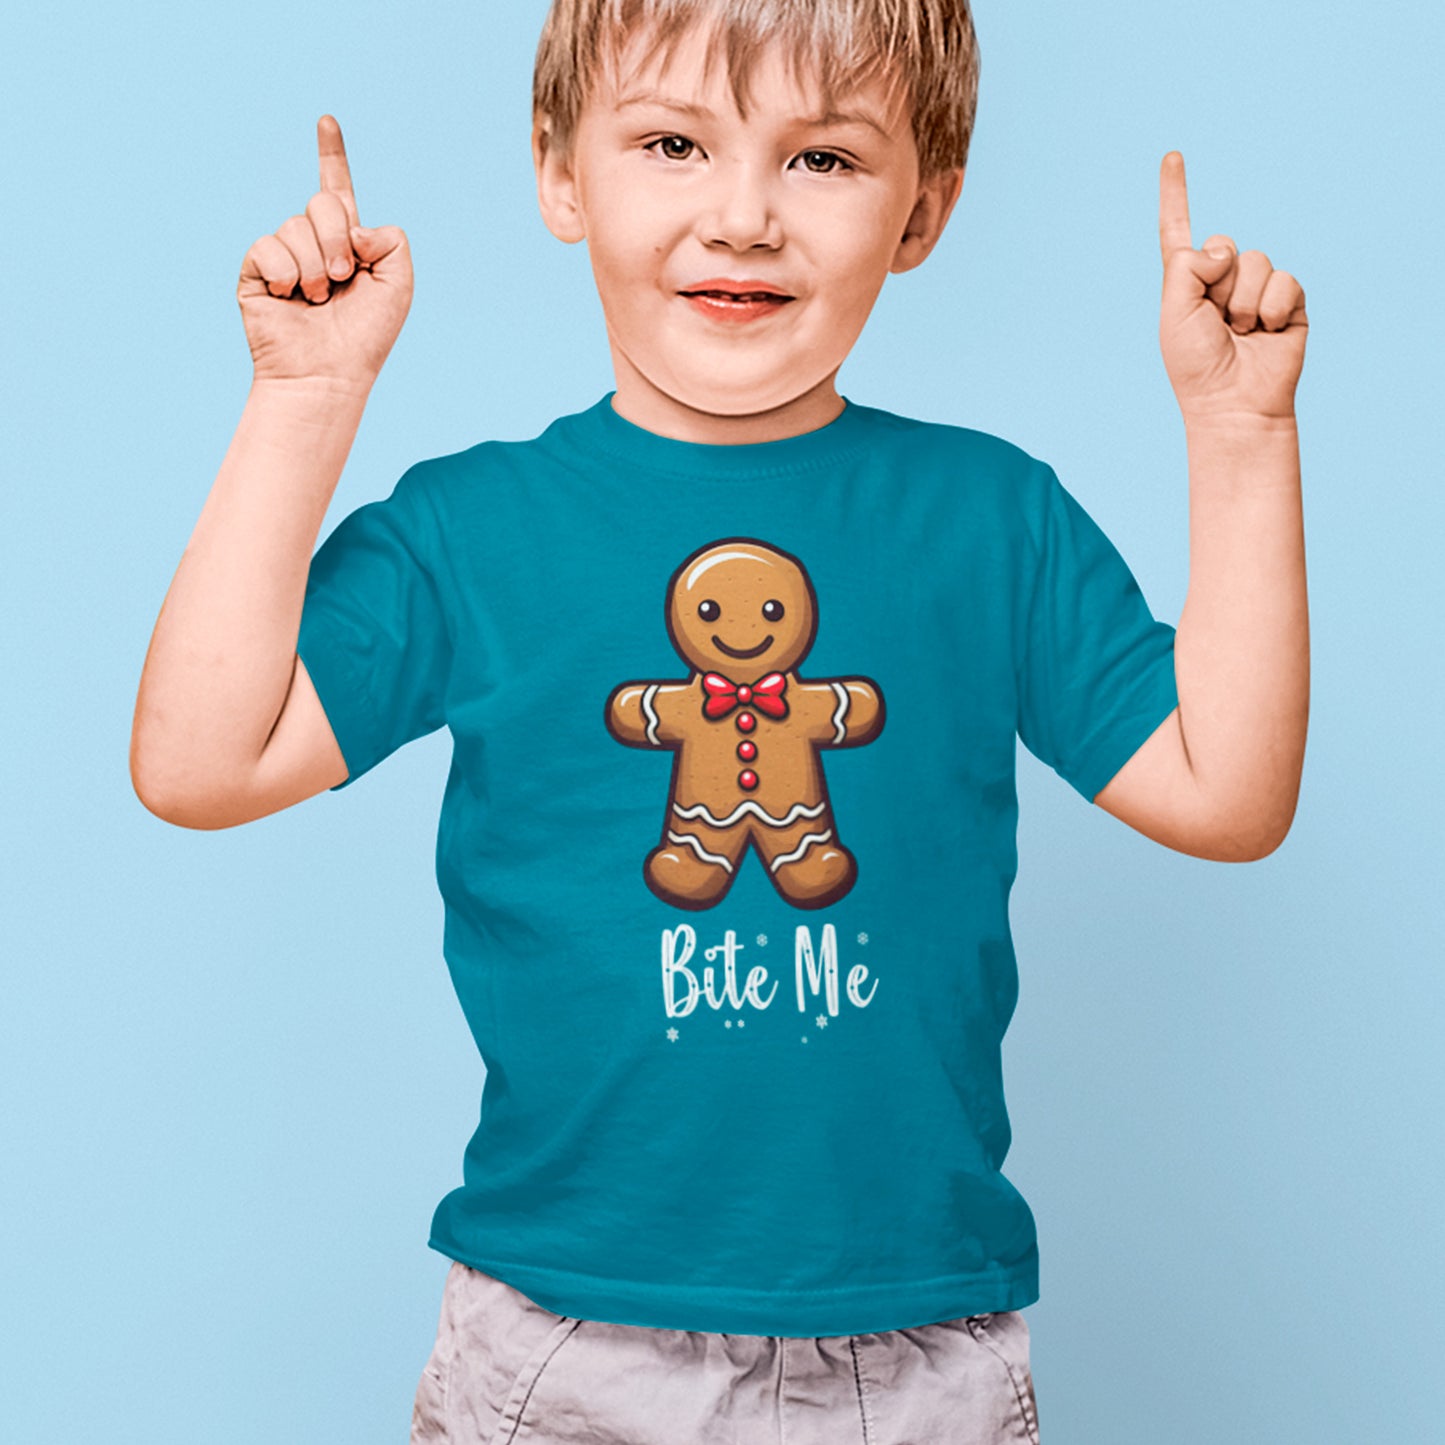 boy wearing Bite Me Organic cotton kids t-shirt